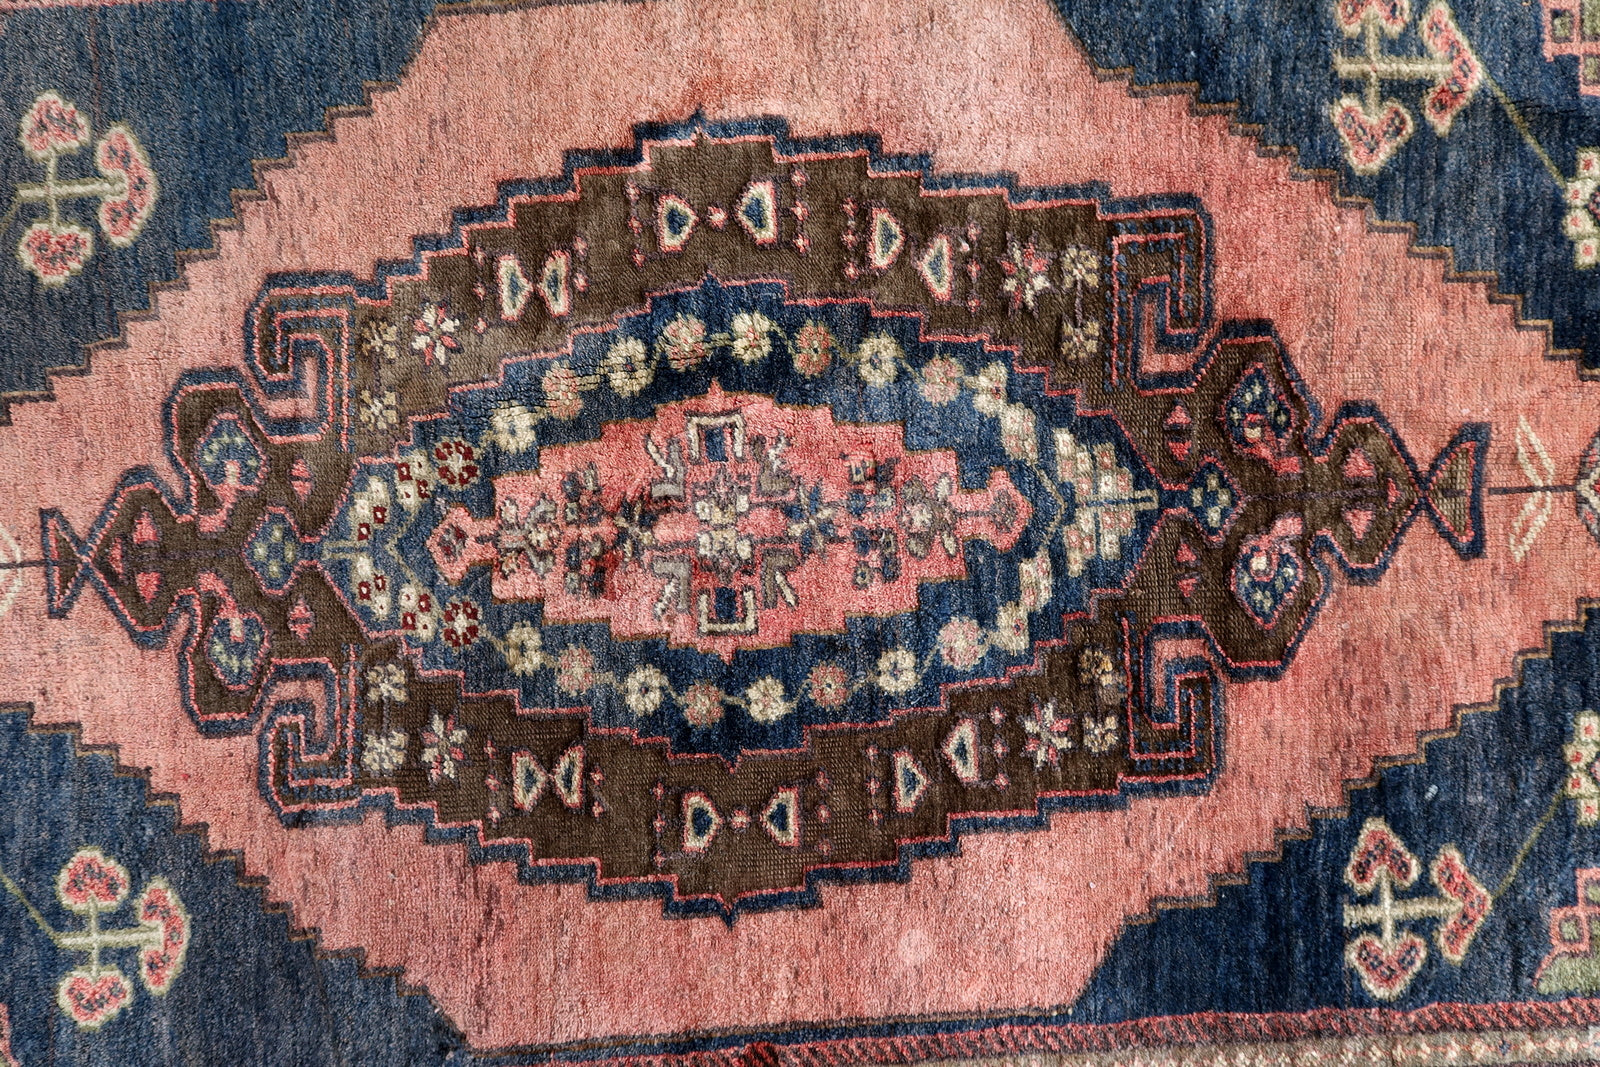 Chocolate Brown Patterns on Handmade Anatolian Carpet